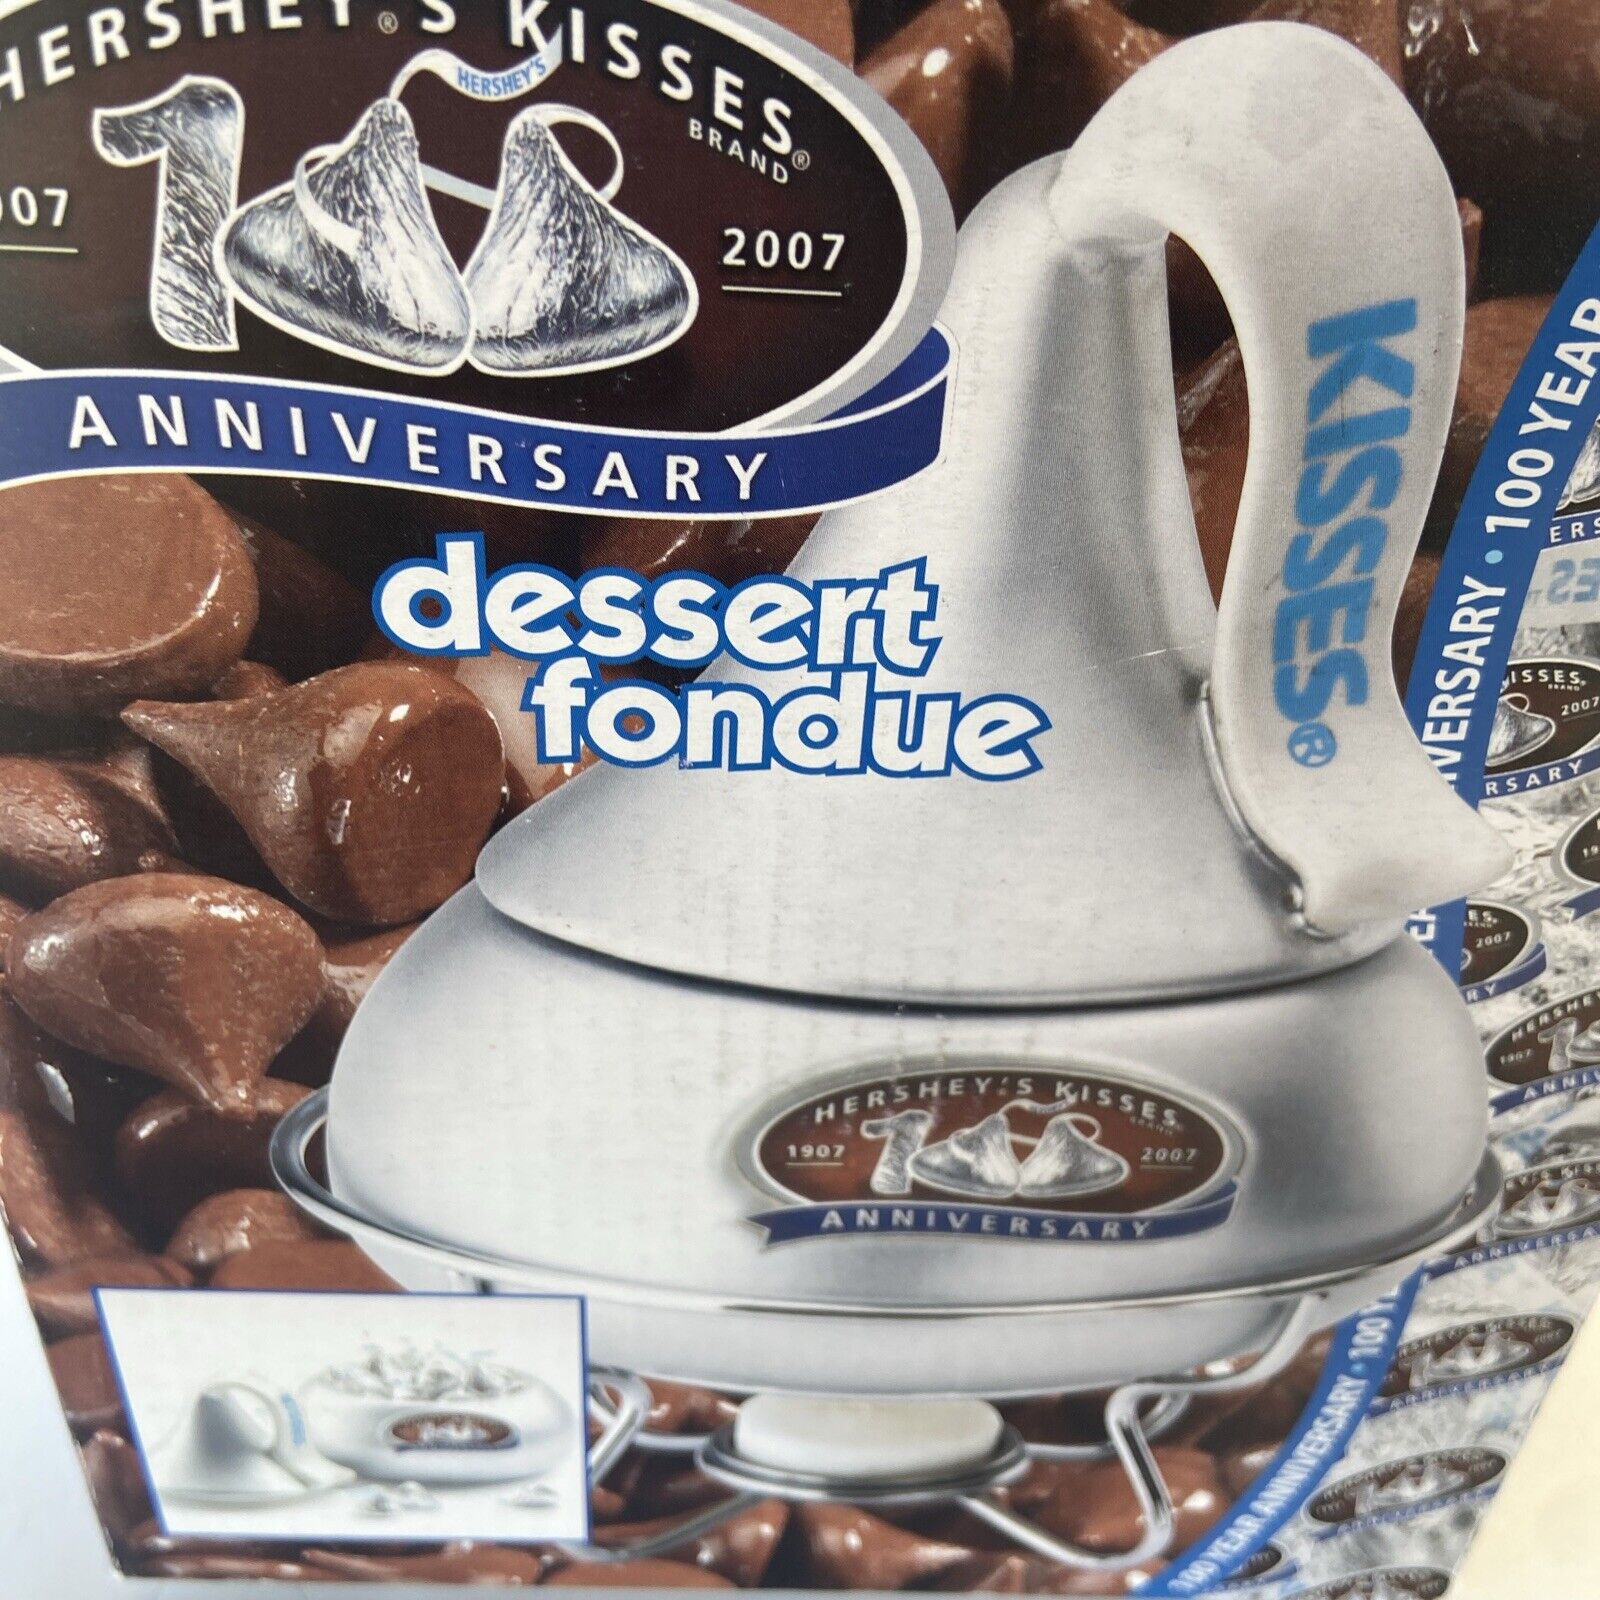 Anniversary Limited Edition Hershey’s Kisses Dessert Fondue Maker  New Open Box